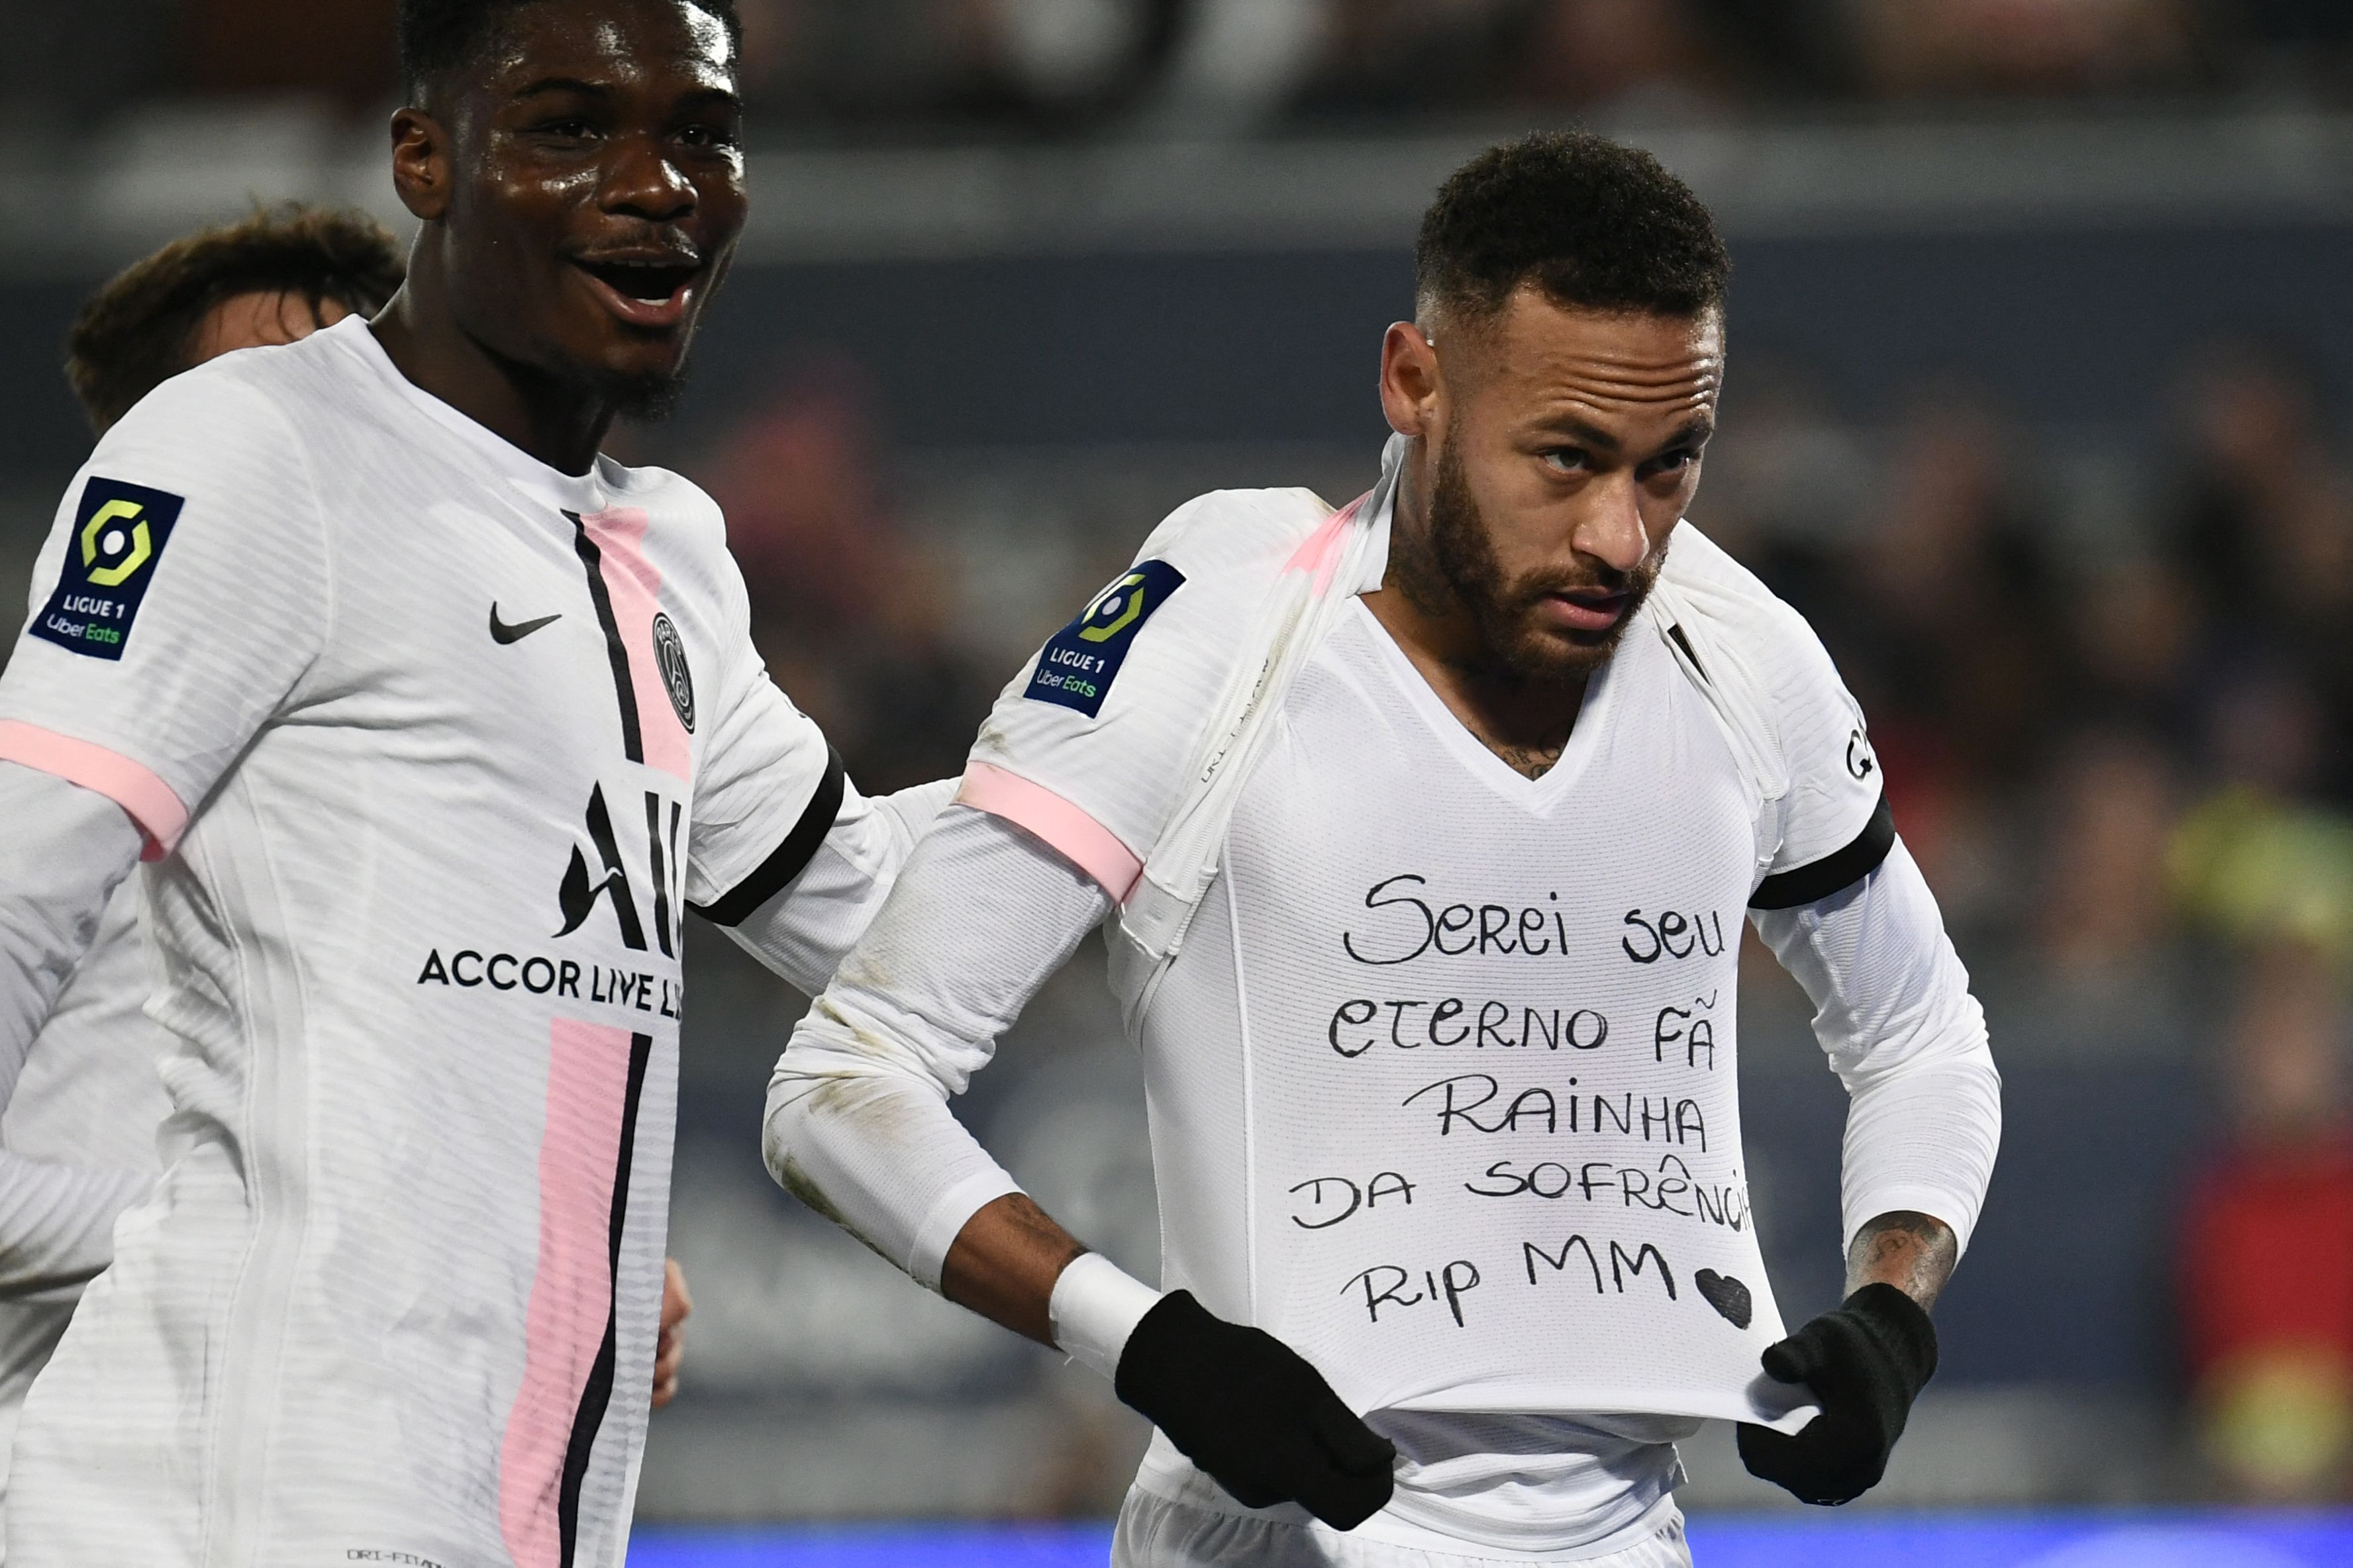 El jugador del Paris Saint-Germain Neymar Jr al momento de homenajear a la estrella de la música de su país, Marilia Mendoncay. (Foto Prensa Libre: AFP)